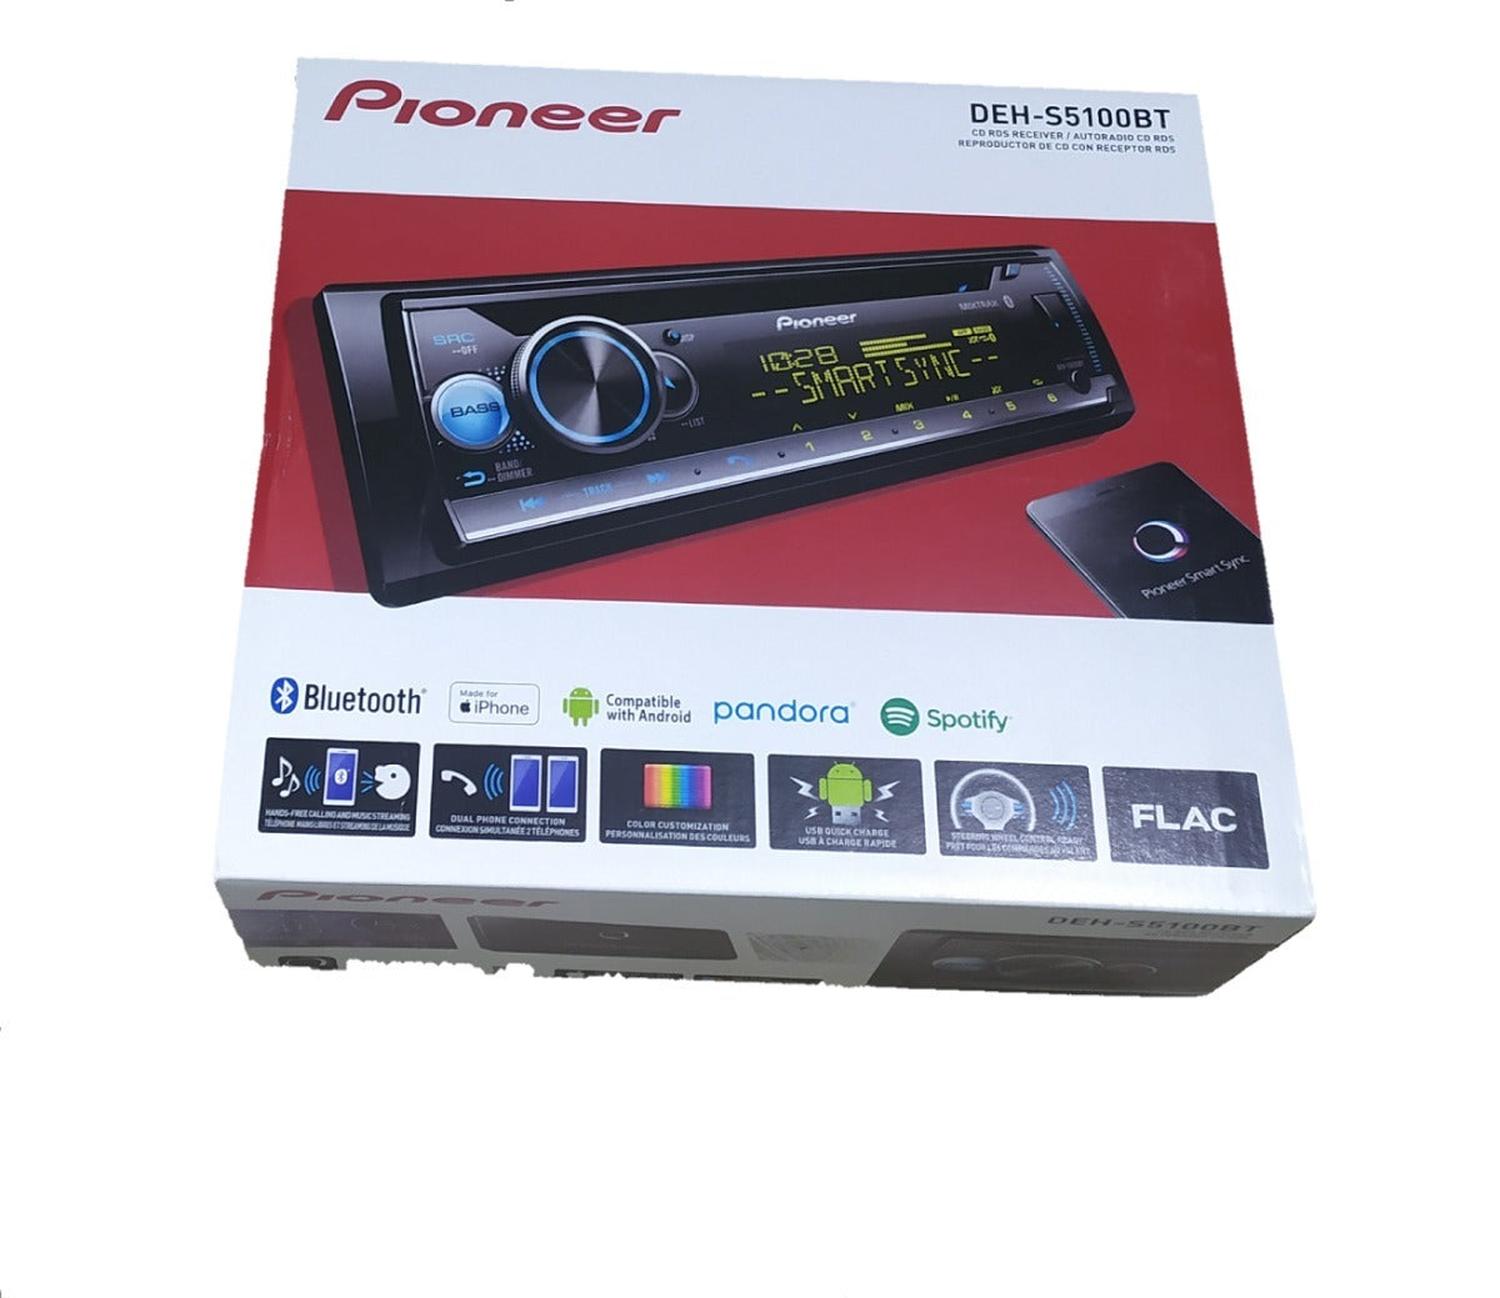 Autoestéreo 1 DIN Pioneer DEH-S5100BT USB Bluetooth CD AUX Spotify Pandora - Audioshop México lo mejor en Car Audio en México -  Pioneer